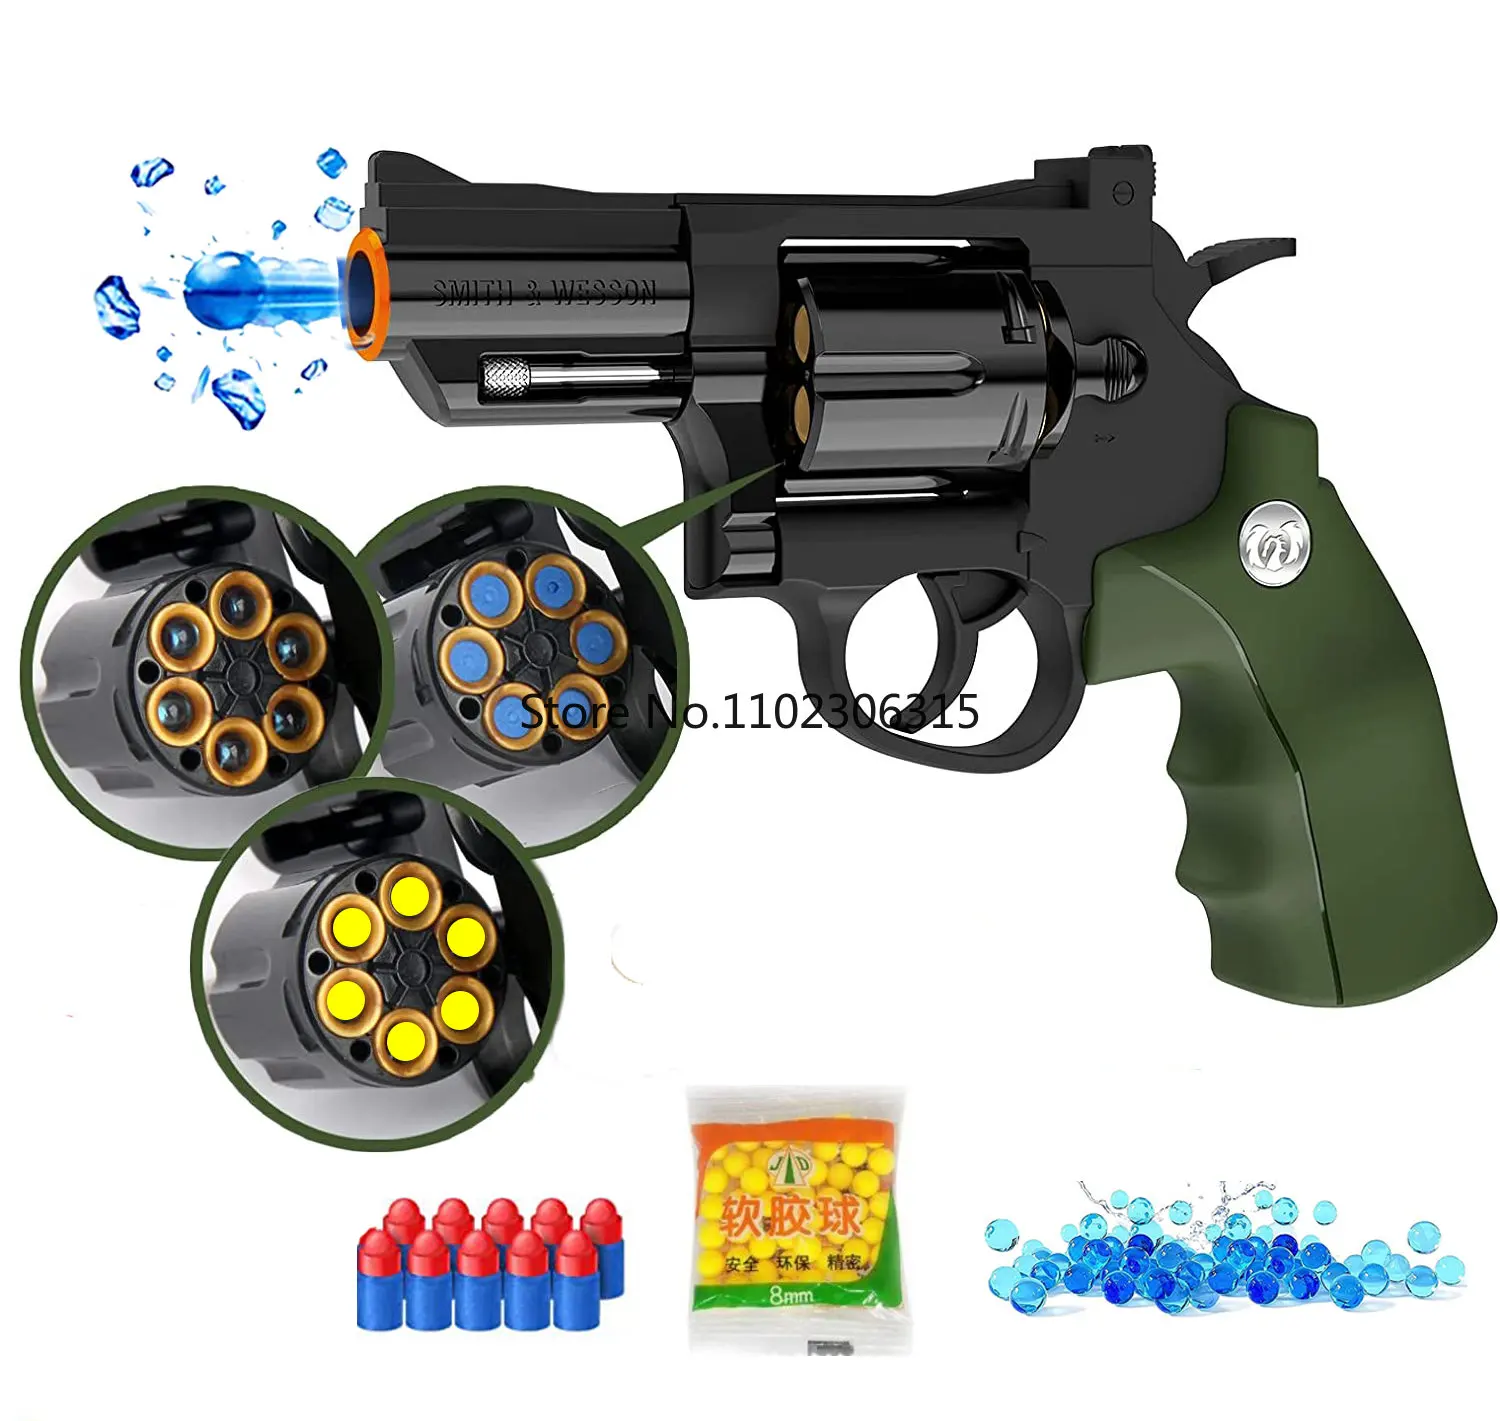 

New ZP5 357 Revolver Pistol Launcher Soft Foam Bullet Gel Ball Blaster Toy Gun Weapon Airsoft Shotgun Pistola for Kids Gift